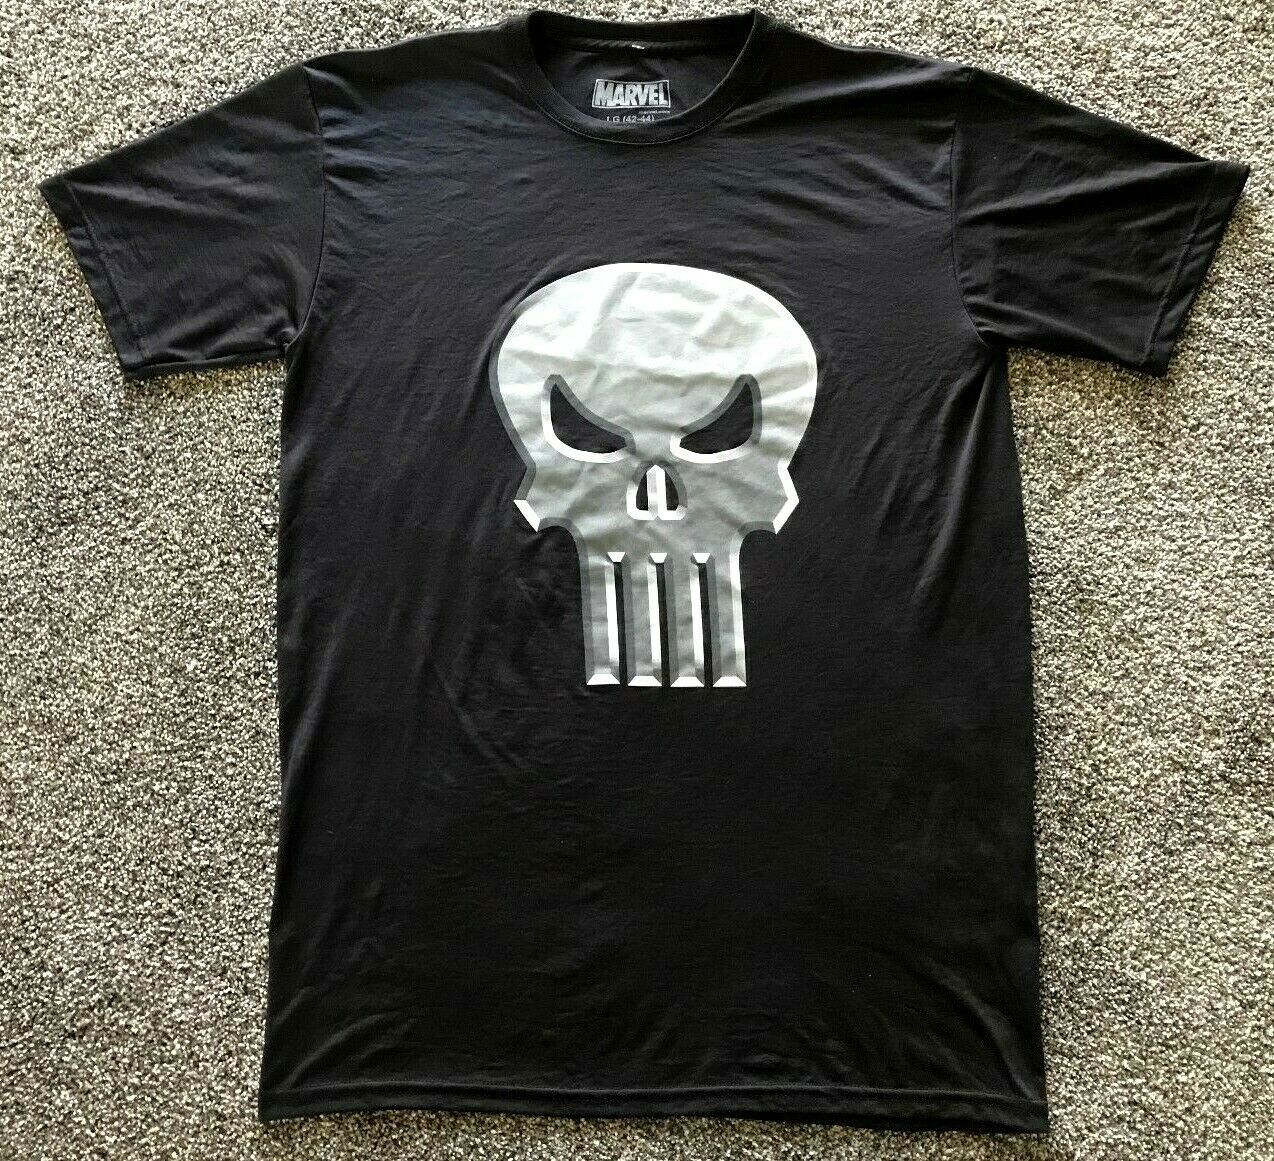 The Punisher T-Shirt Size Large Black ~Marvel Comics~